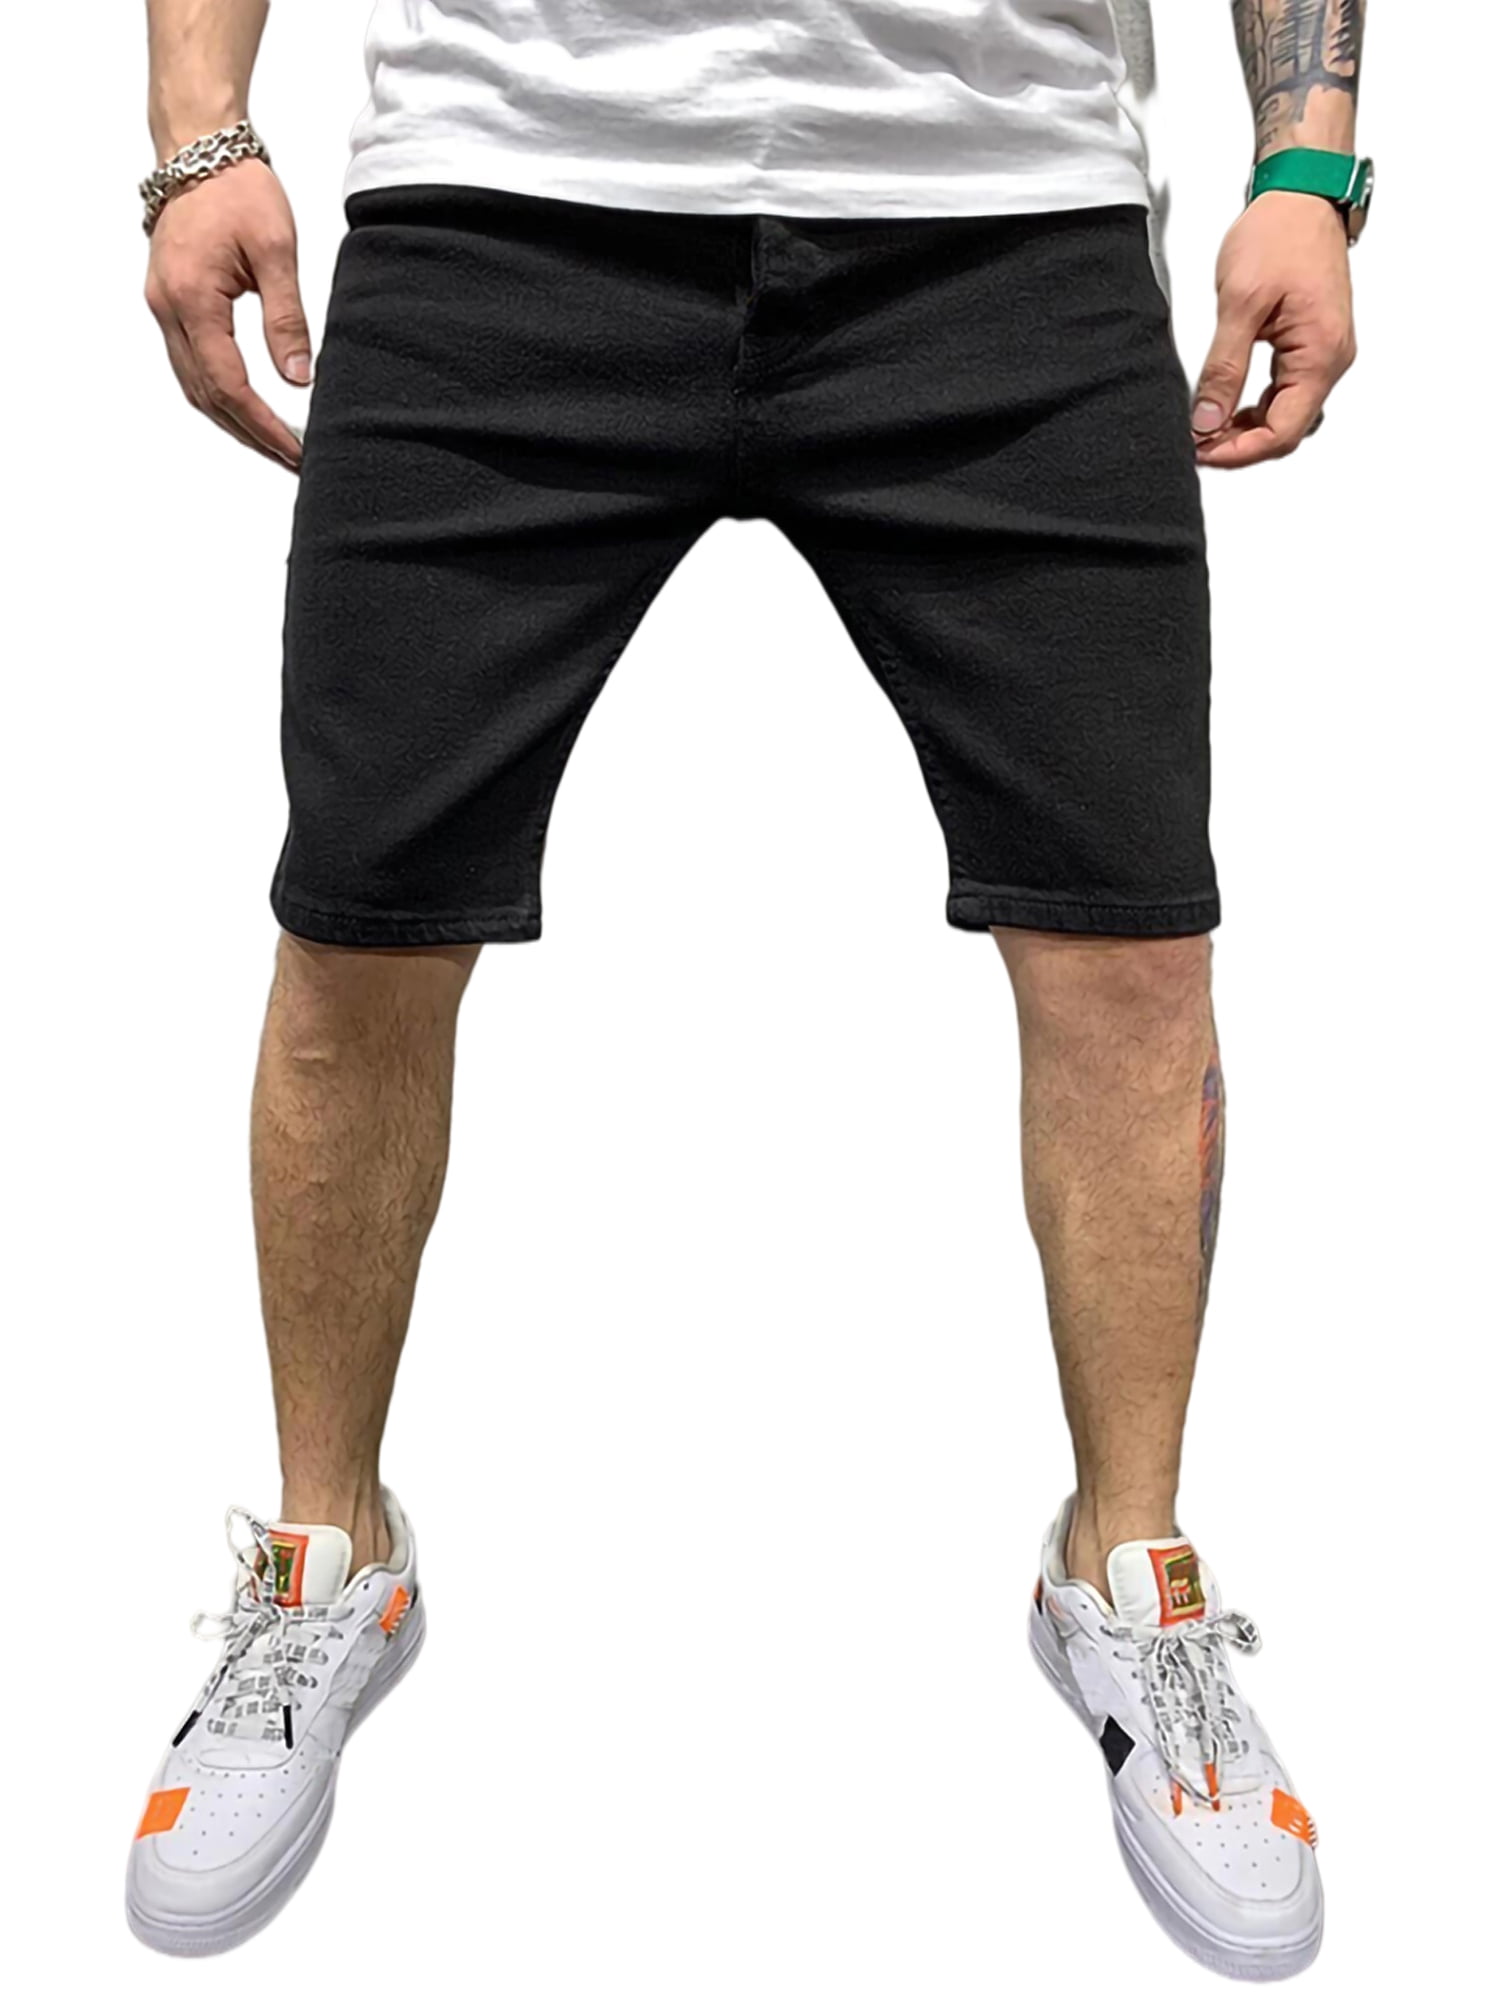 GRMO Men Slim Fit Straight Leg Casual Ripped Distressed Summer Denim Shorts Jeans